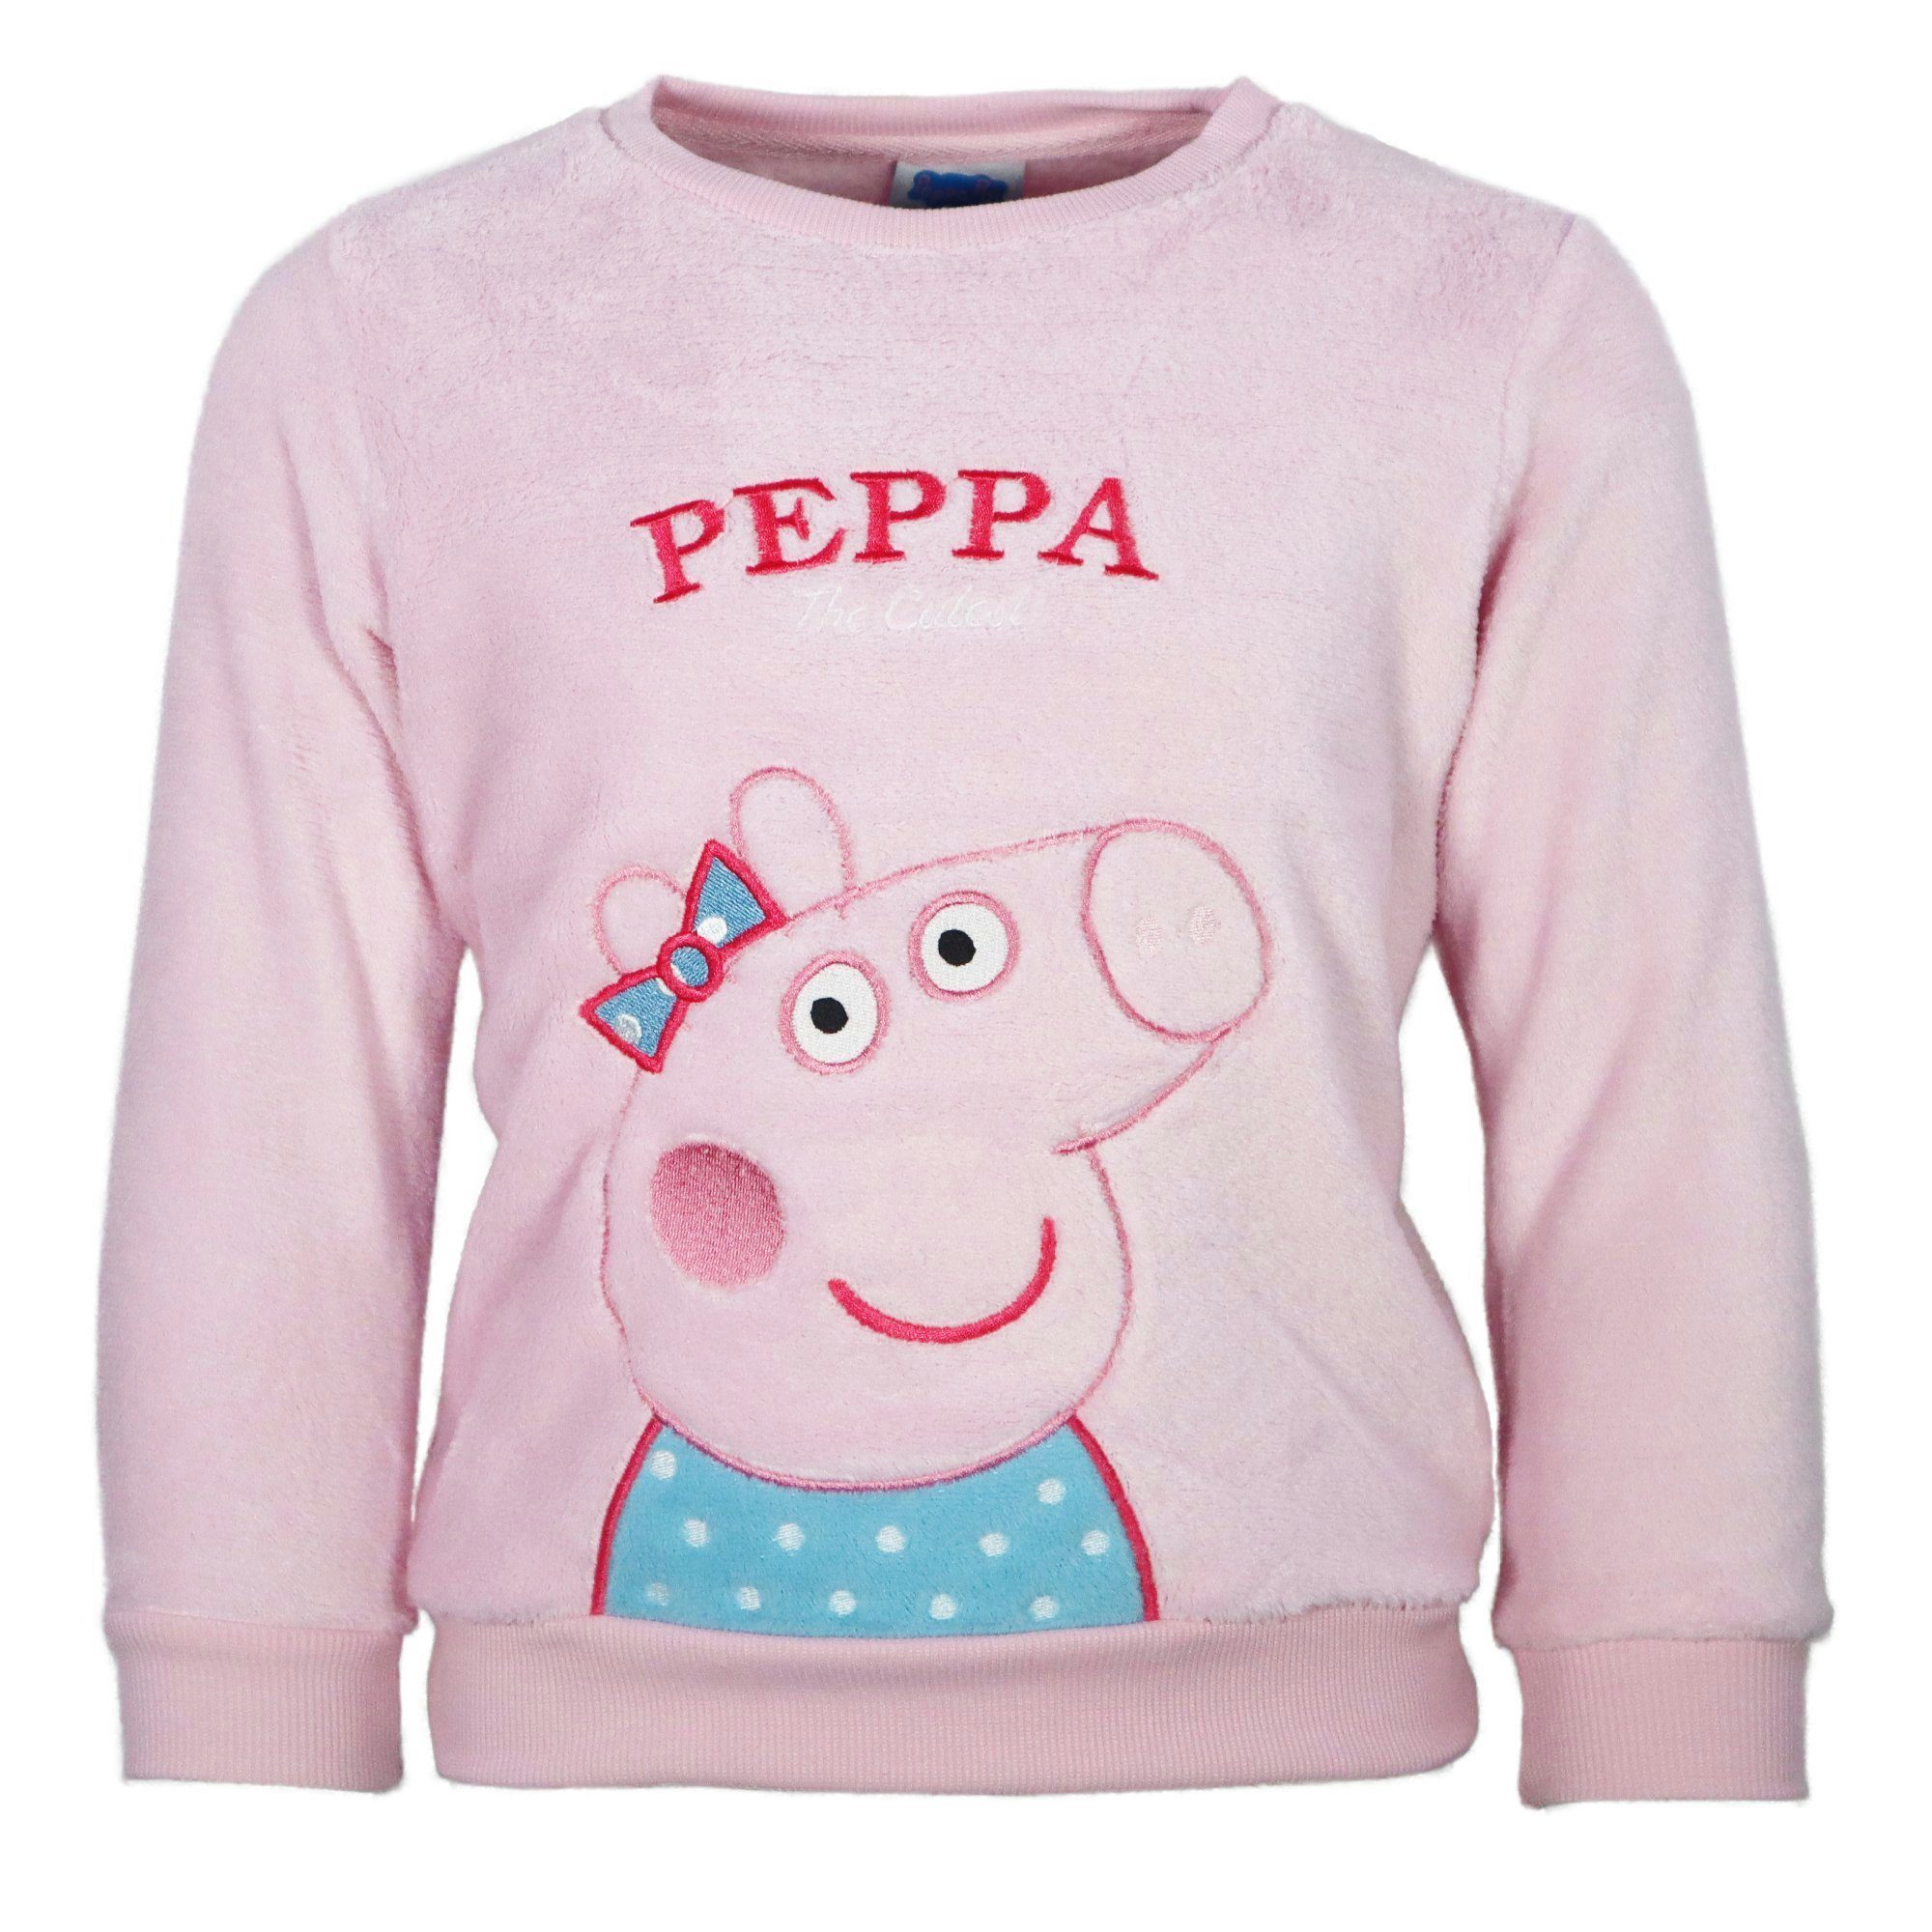 Kinder Pullover Mädchen Wutz Pig Pig 116 Peppa Peppa Coral Gr. 98 Pulli Sweater Fleece bis